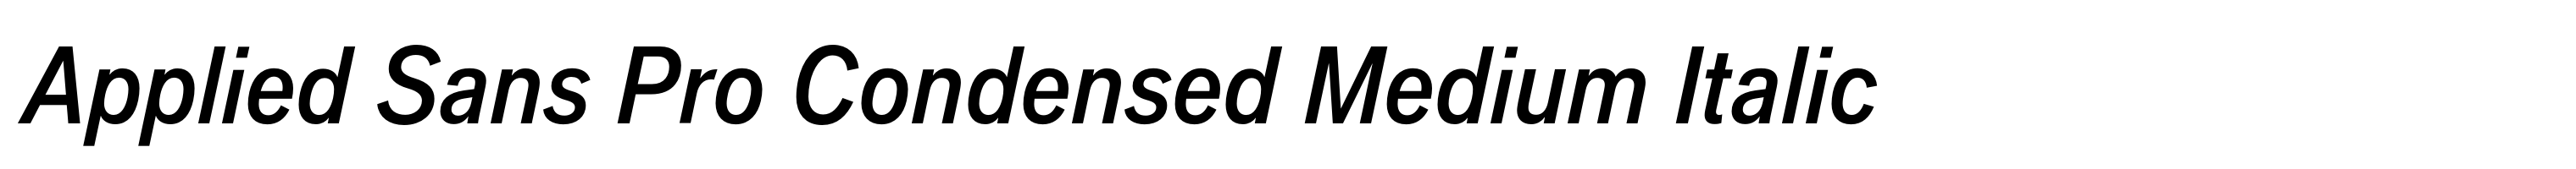 Applied Sans Pro Condensed Medium Italic